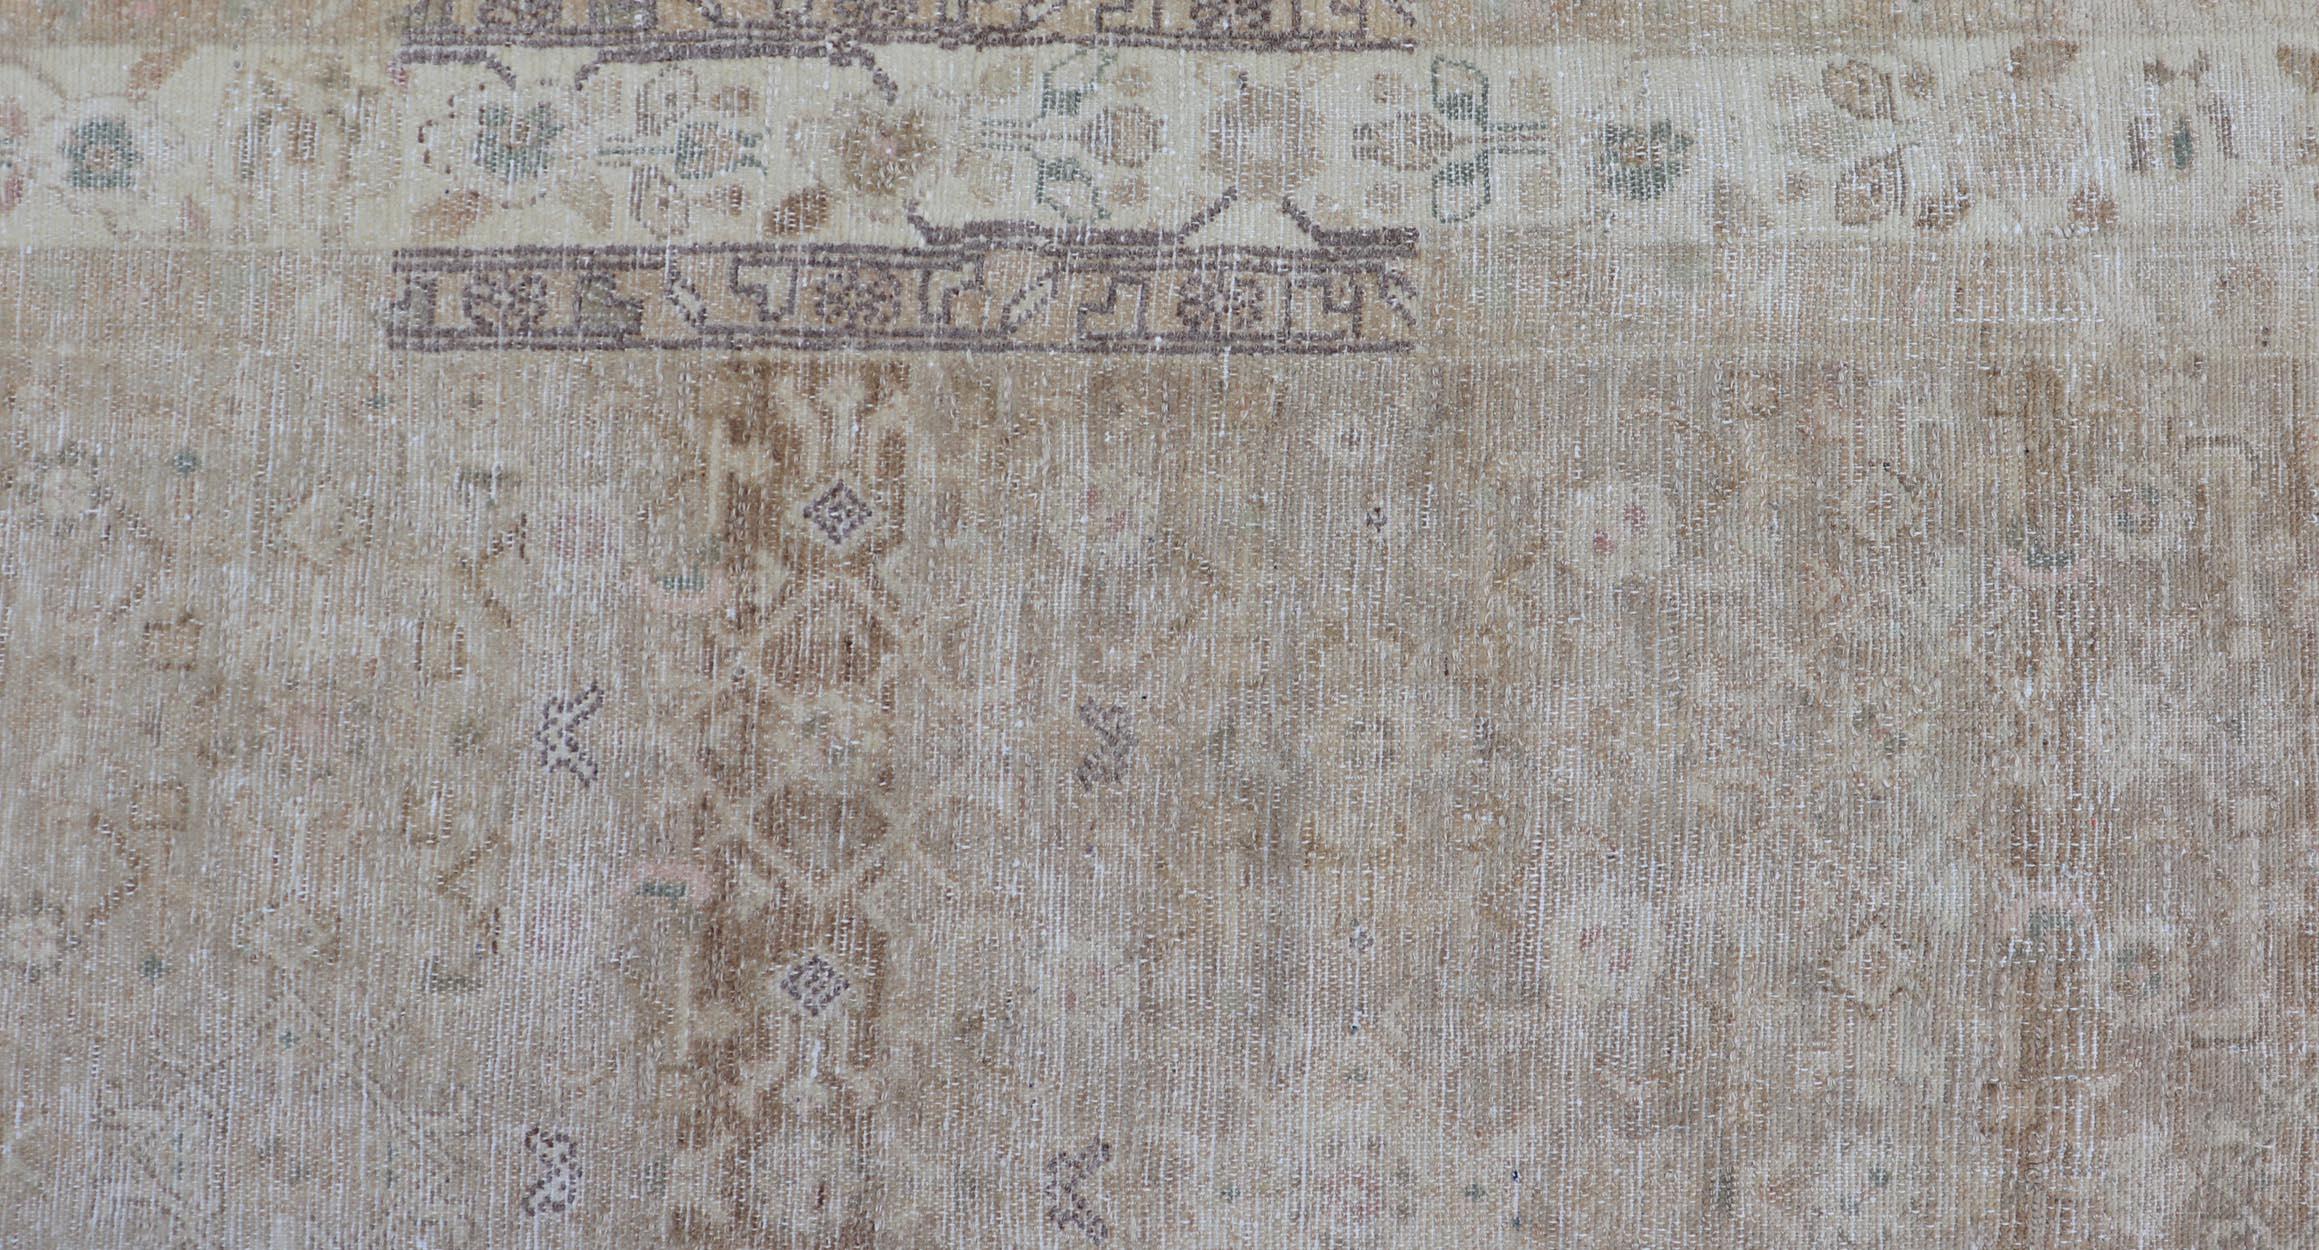 Wool Persian Hamedan Vintage Gallery Rug with Sub-Geometric Design Earth Tones For Sale